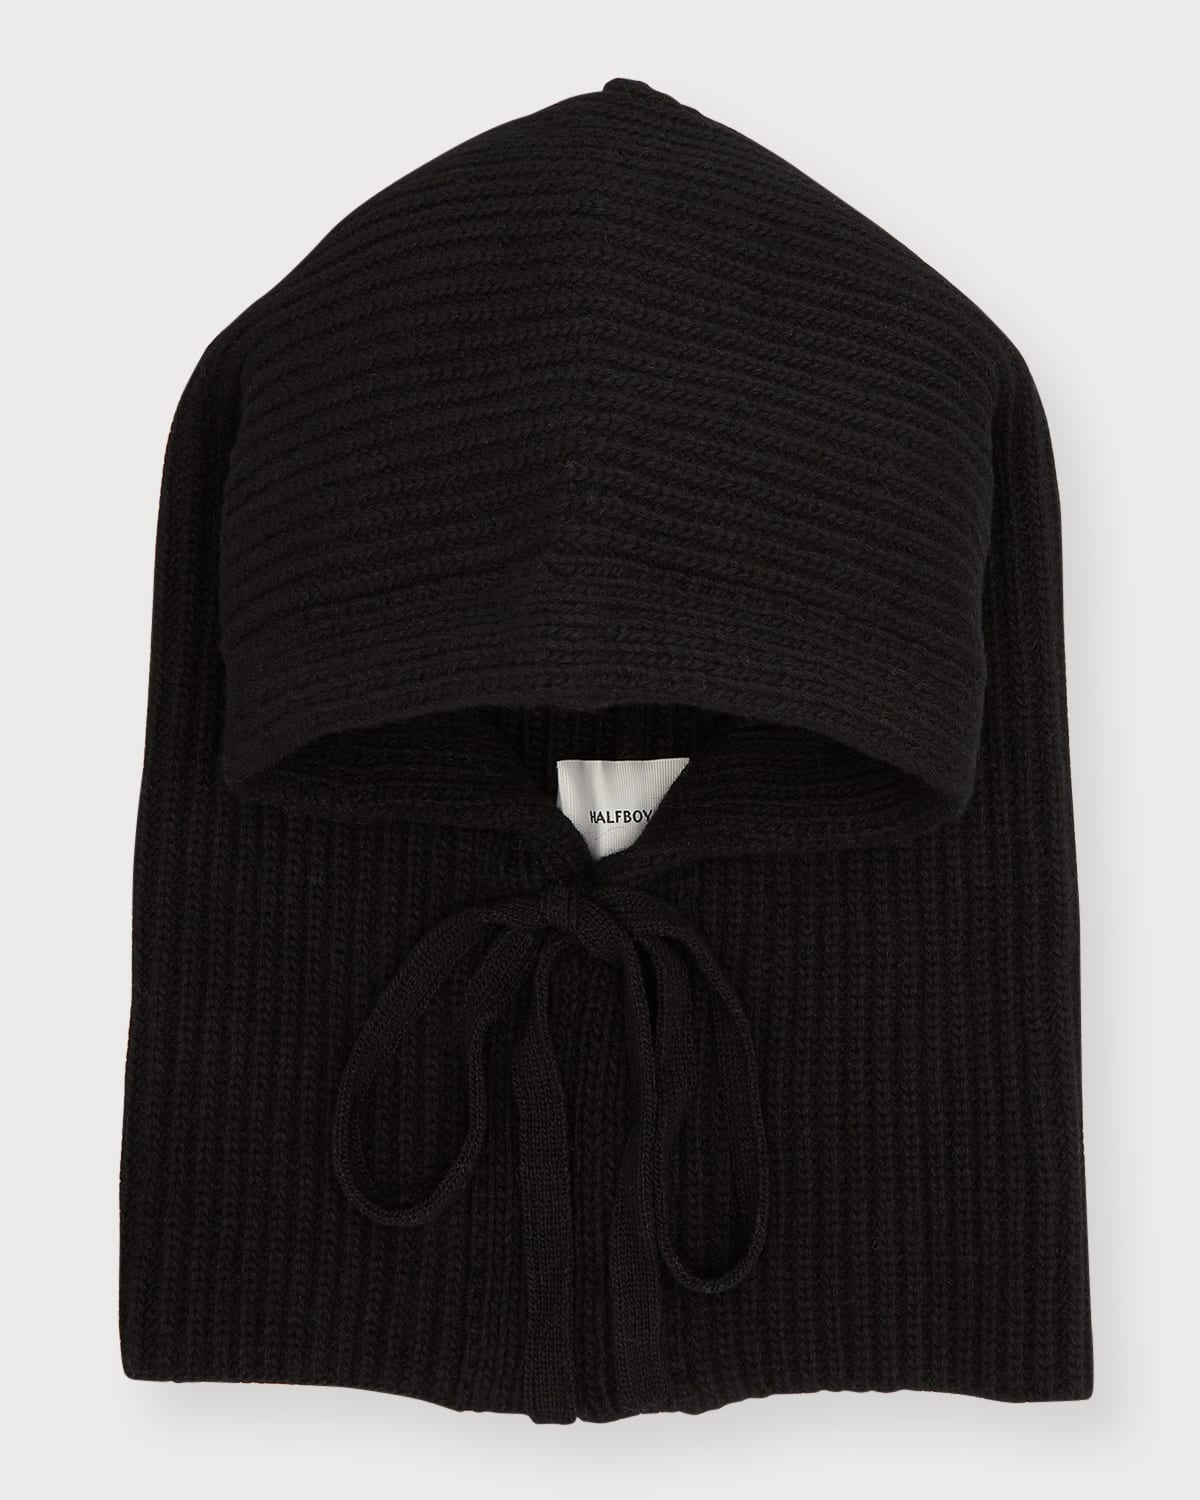 Halfboy Ribbed-knit Wool Balaclava In Black